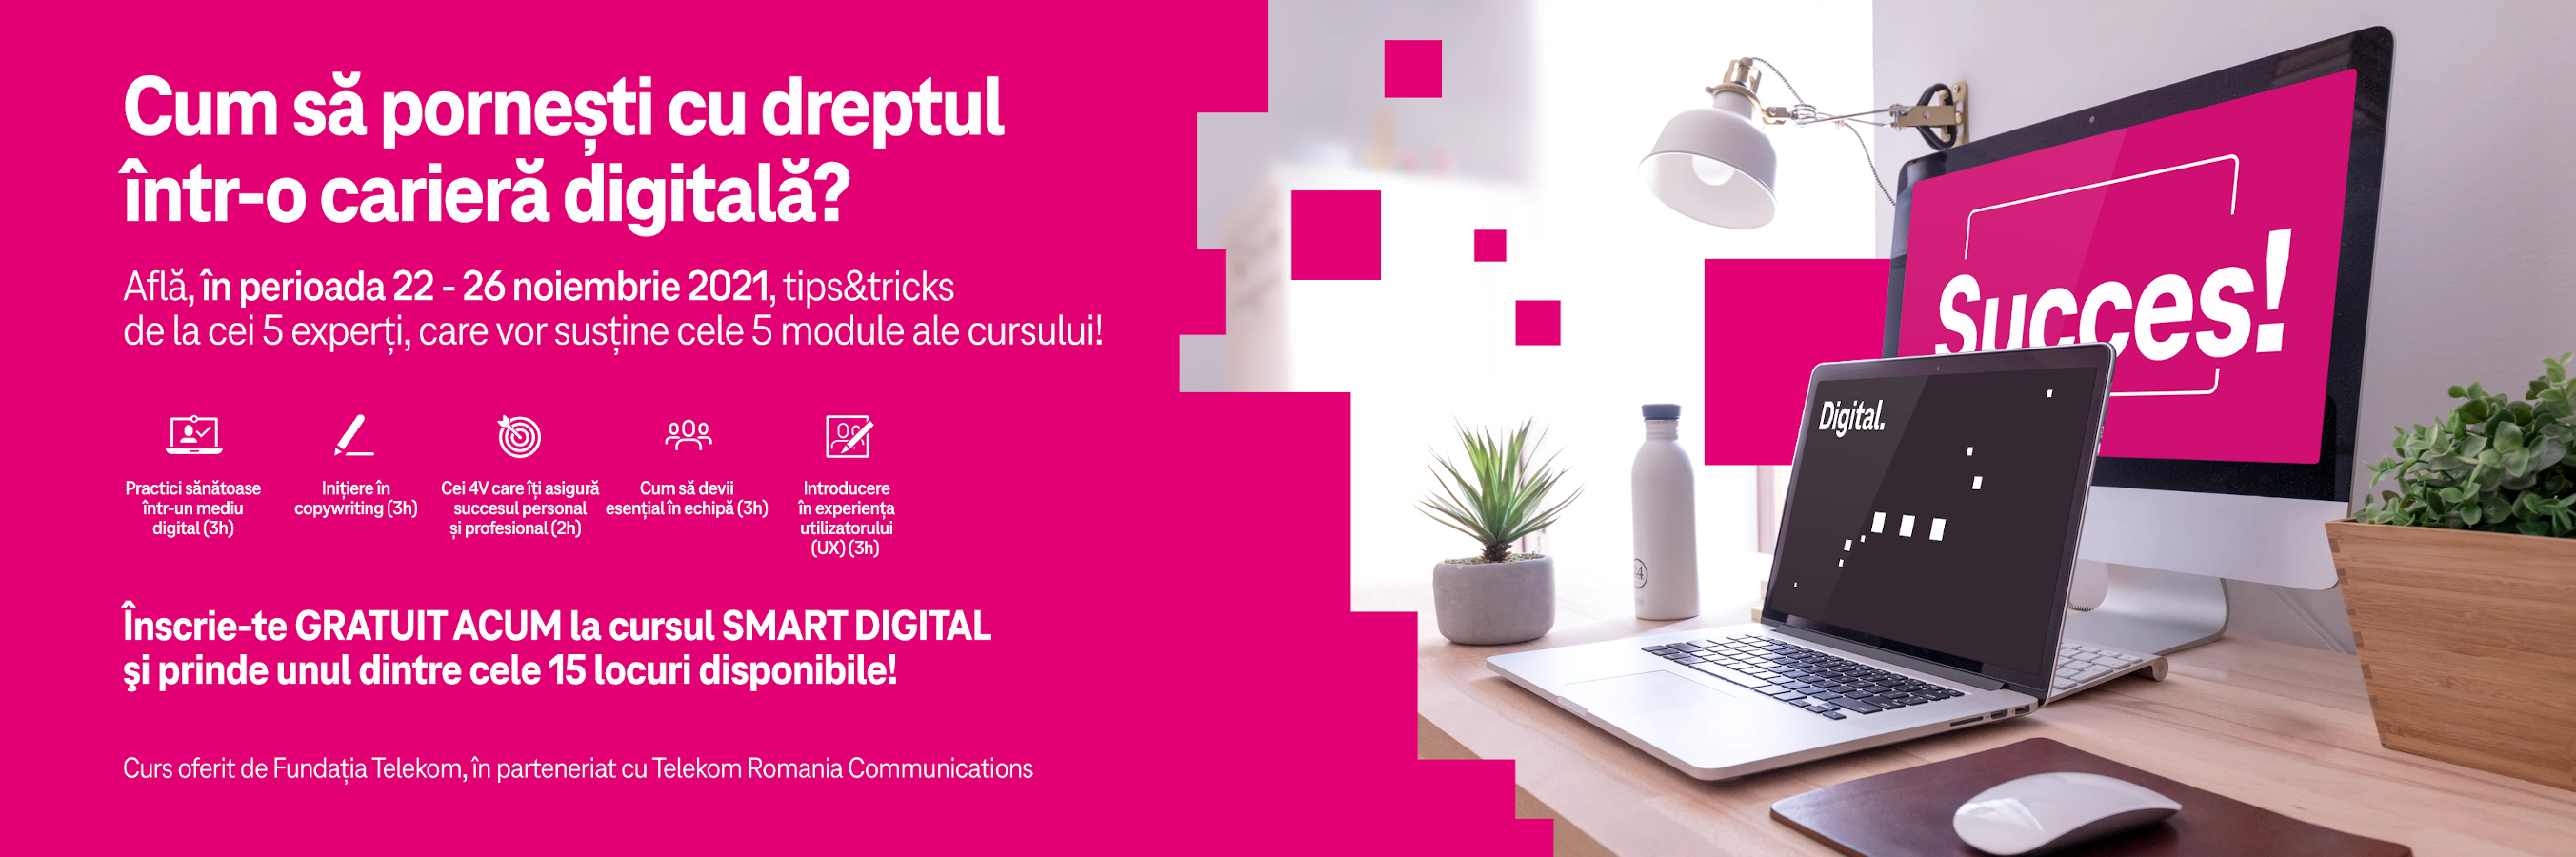 Fundaţia Telekom și Telekom Romania Communications cursuri gratuite tineri digitalizare